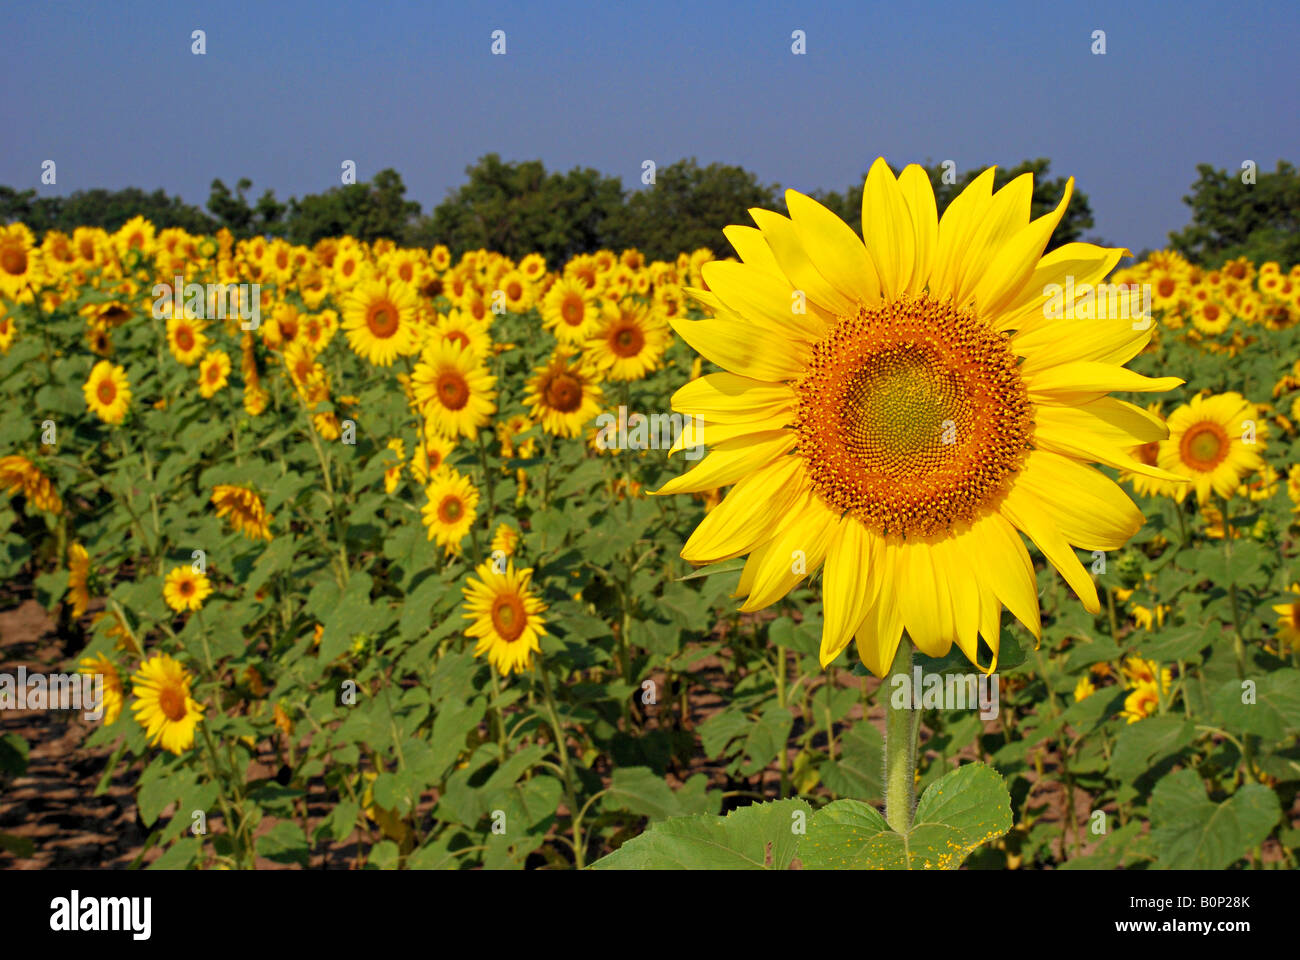 Helianthus or sunflower field Stock Photo